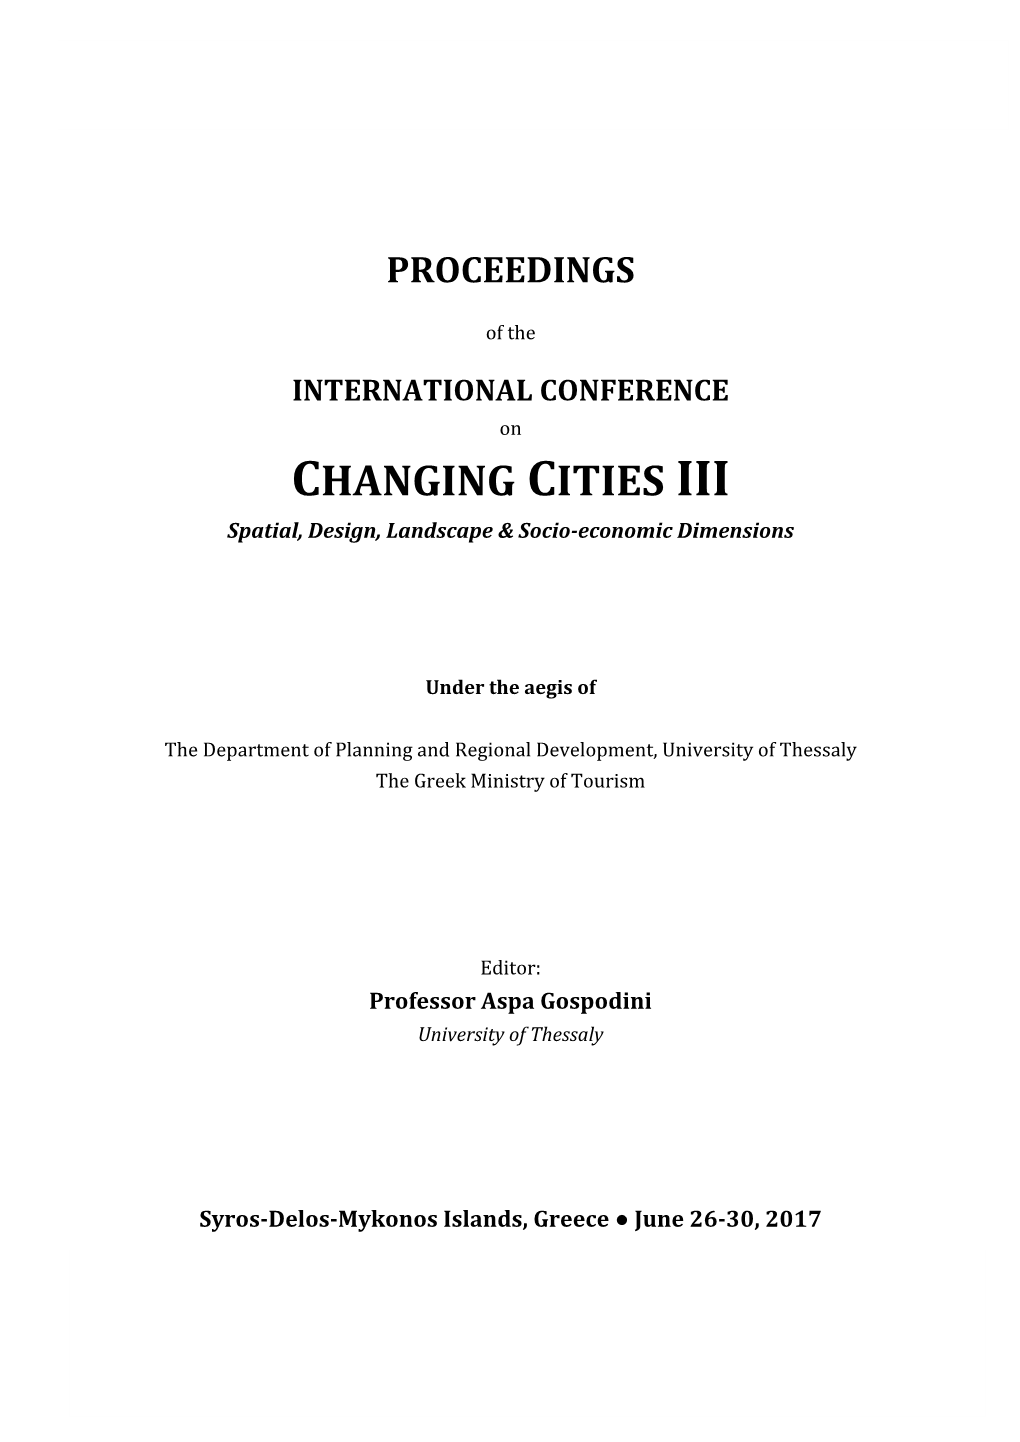 CHANGING CITIES III Spatial, Design, Landscape & Socio-Economic Dimensions